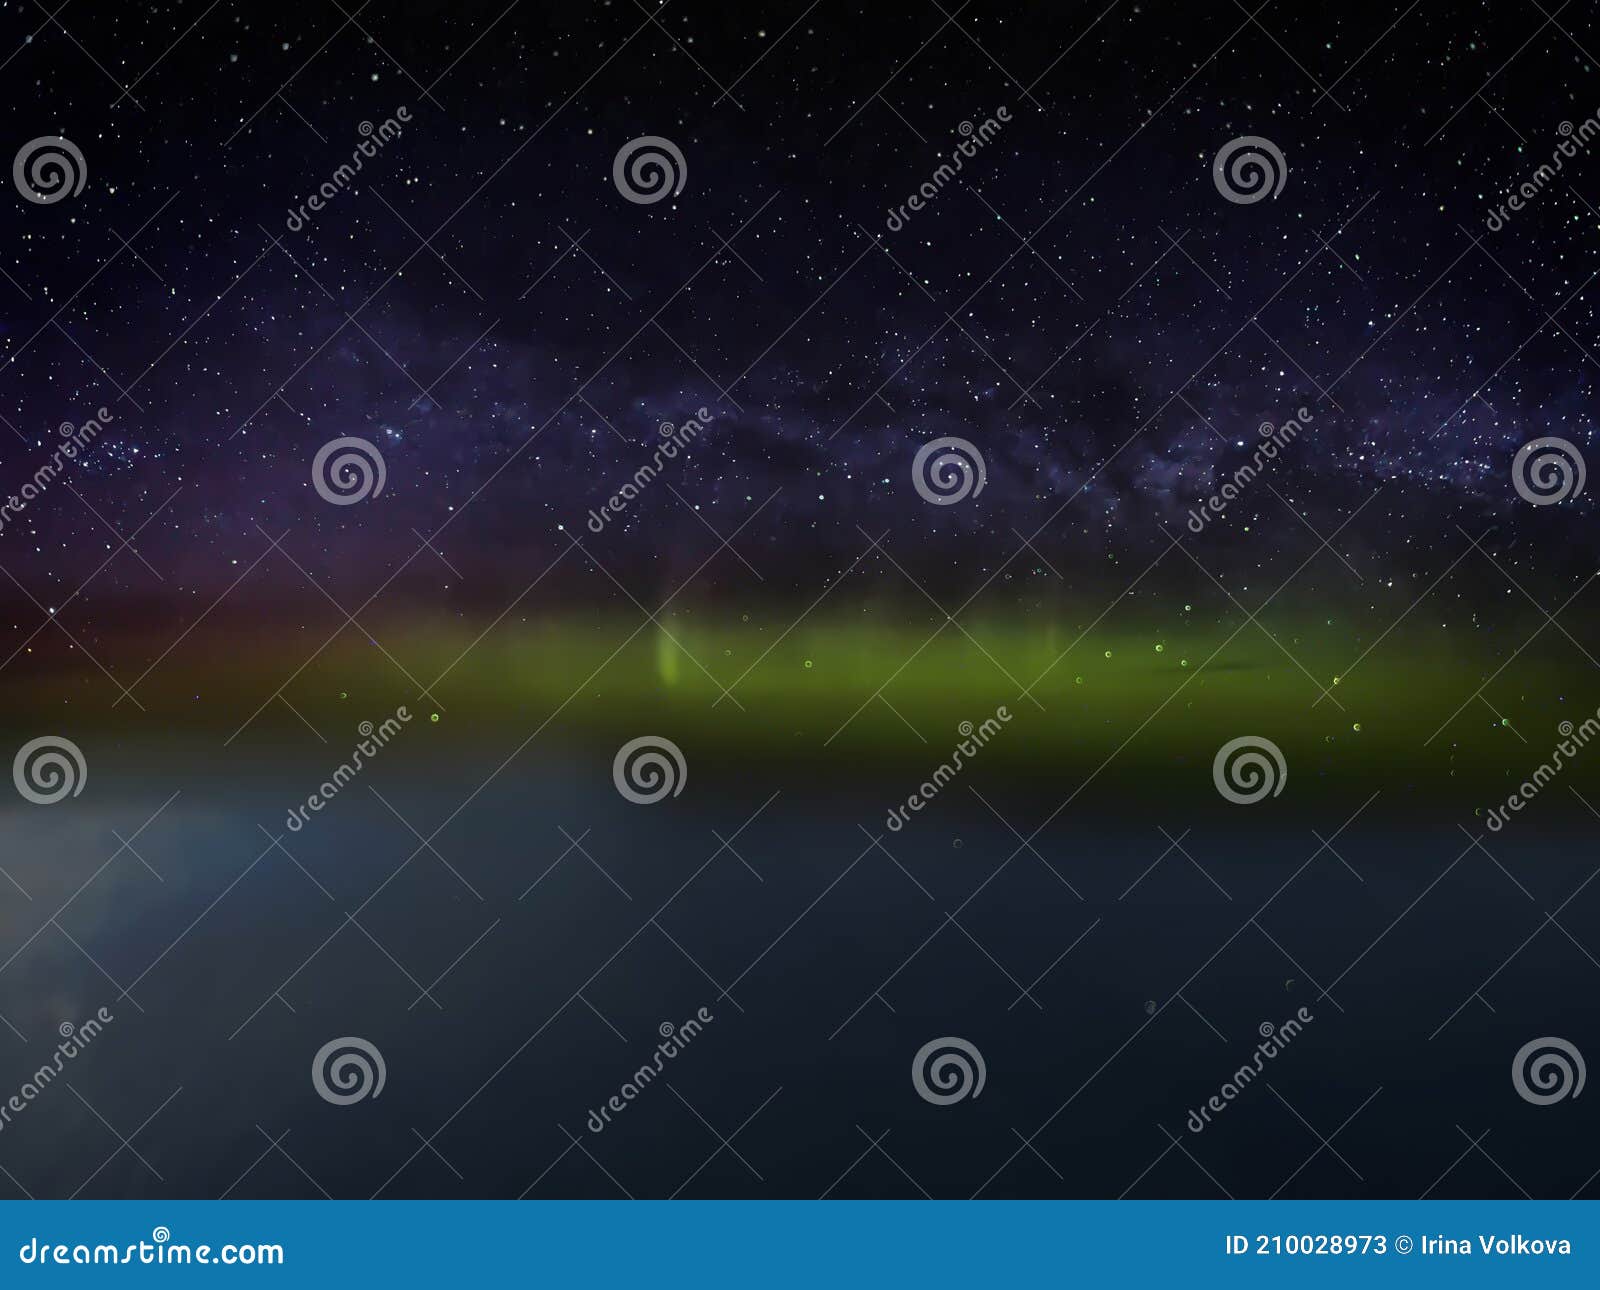 aurora balearic at night dark starry sky norten skyscape